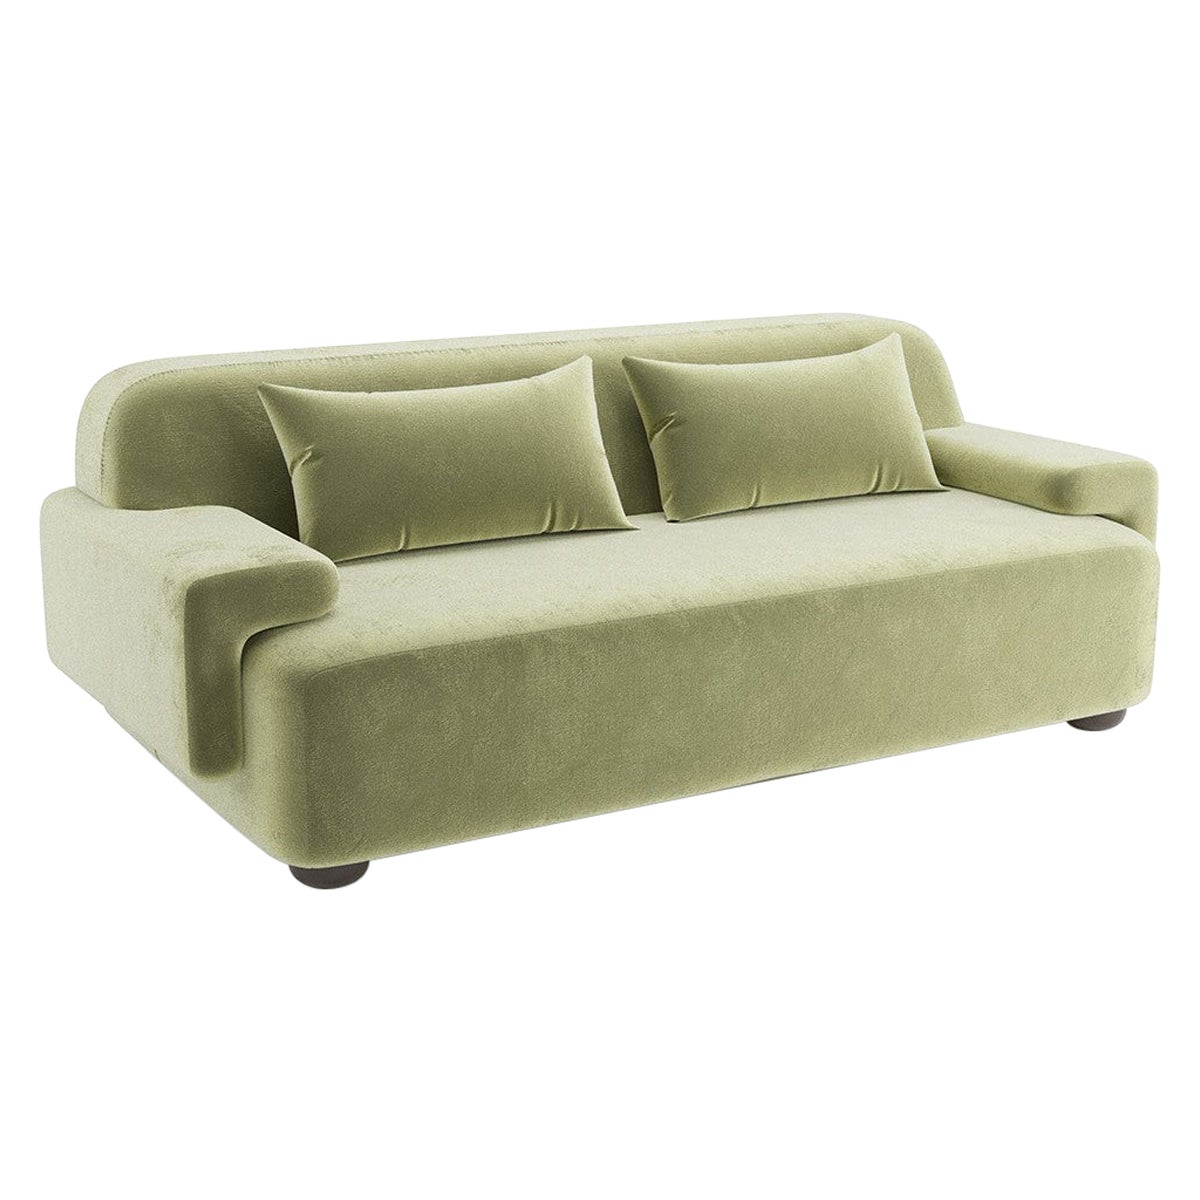 Popus Editions Lena 2.5 Seater Sofa in Almond Green Como Velvet Upholstery